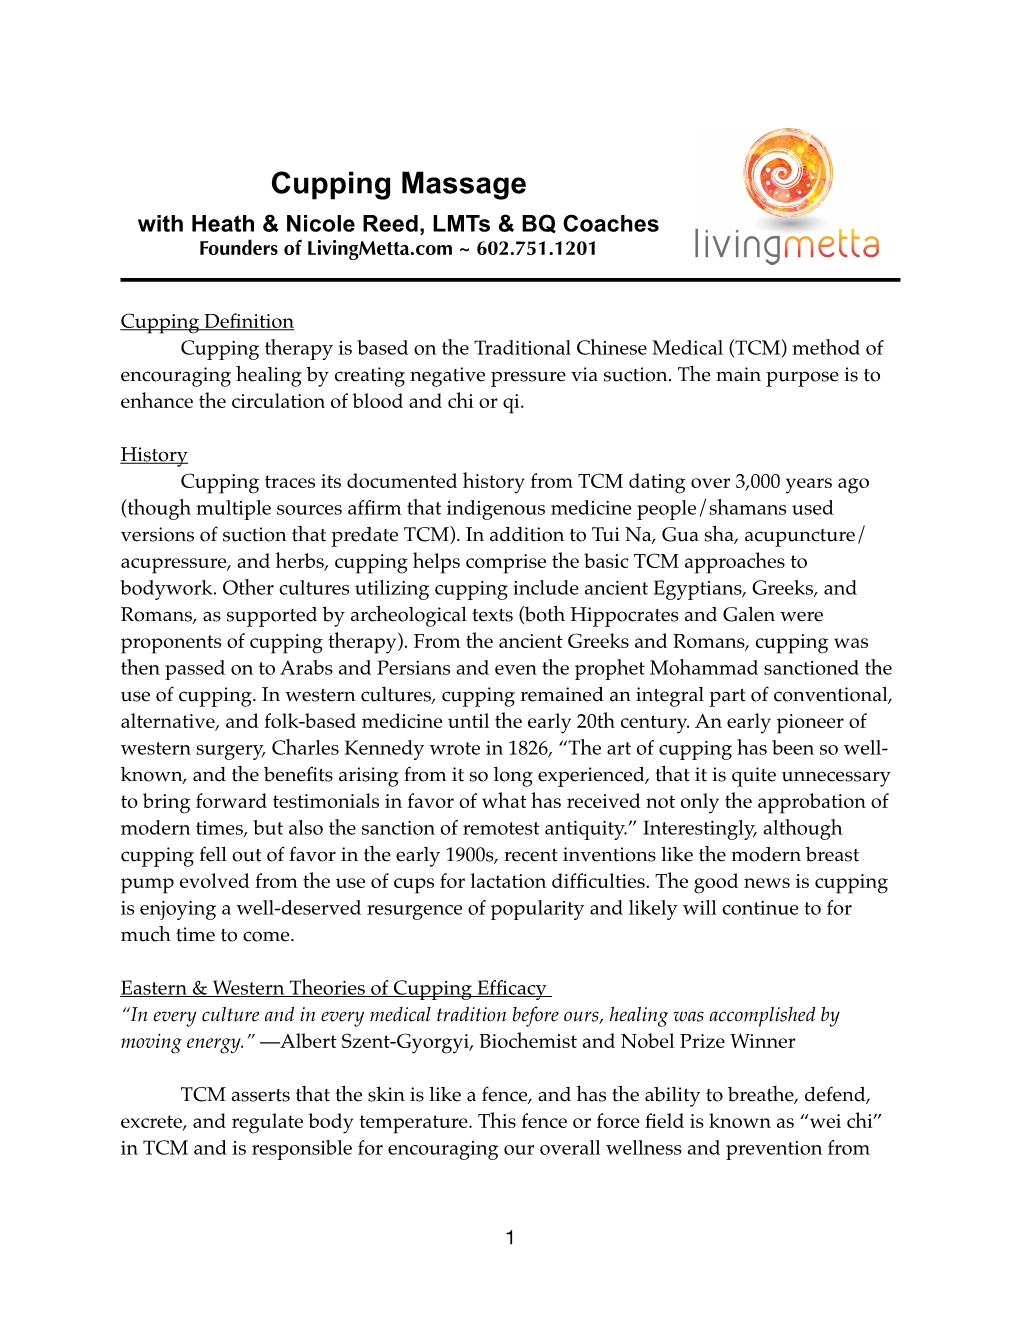 Cupping Massage Handout 7.2020